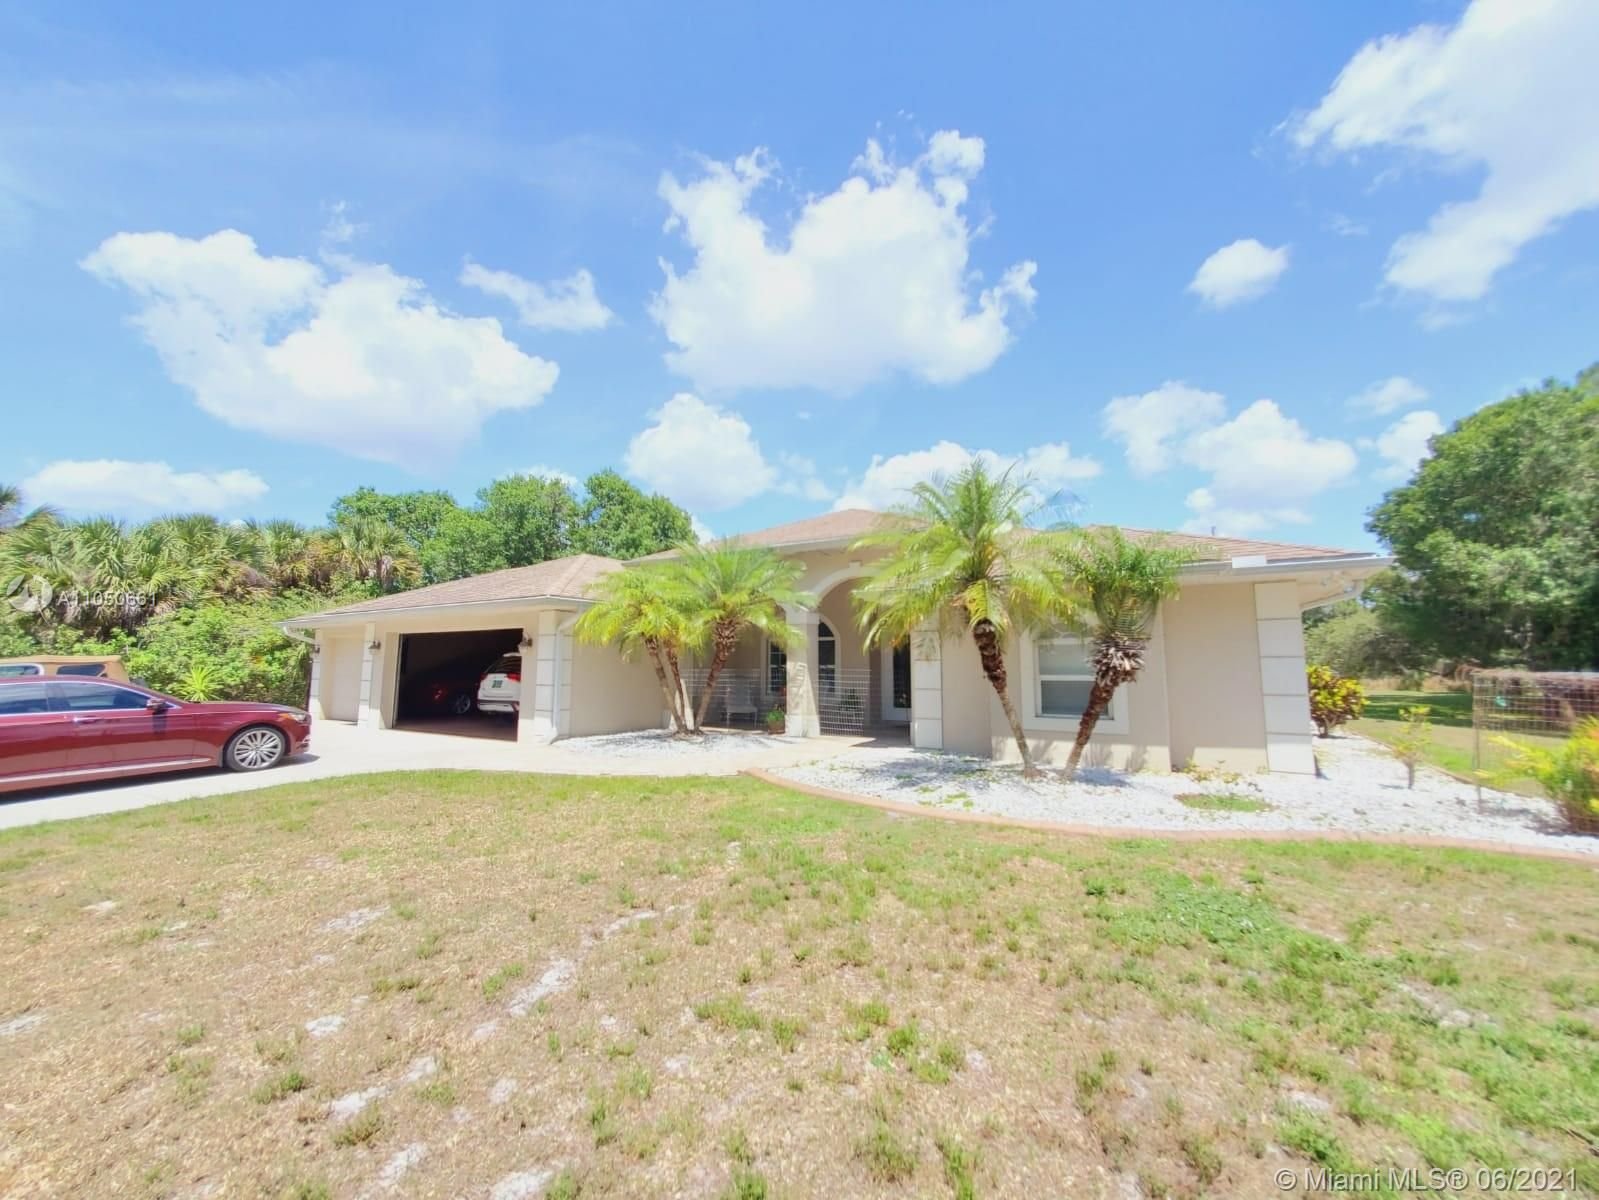 Real estate property located at 5938 Malton, Sarasota County, North Port, FL